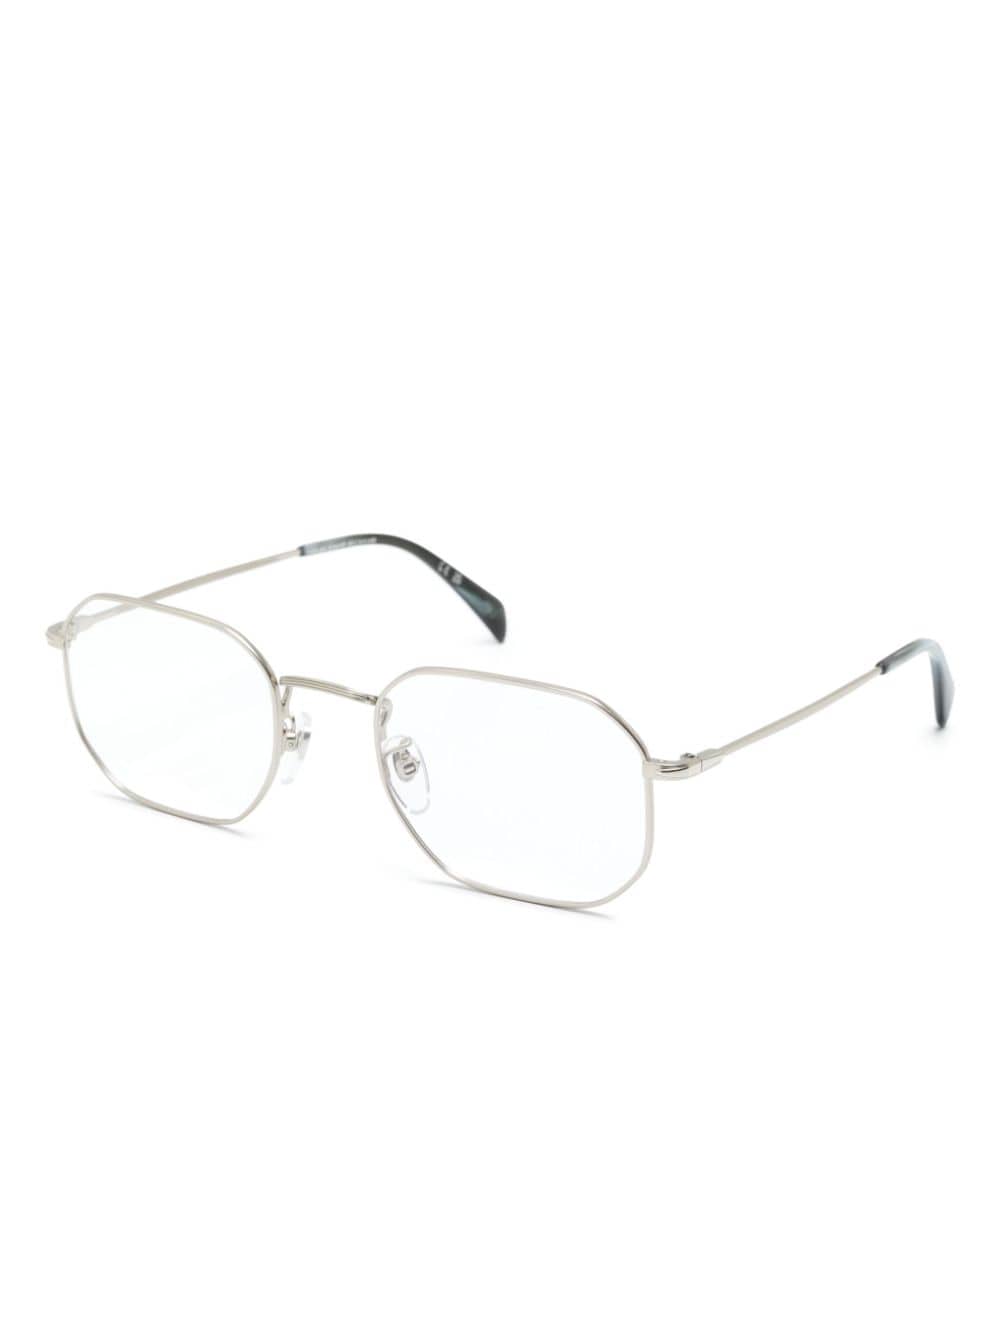 Eyewear by David Beckham geometric-frame glasses - Zilver